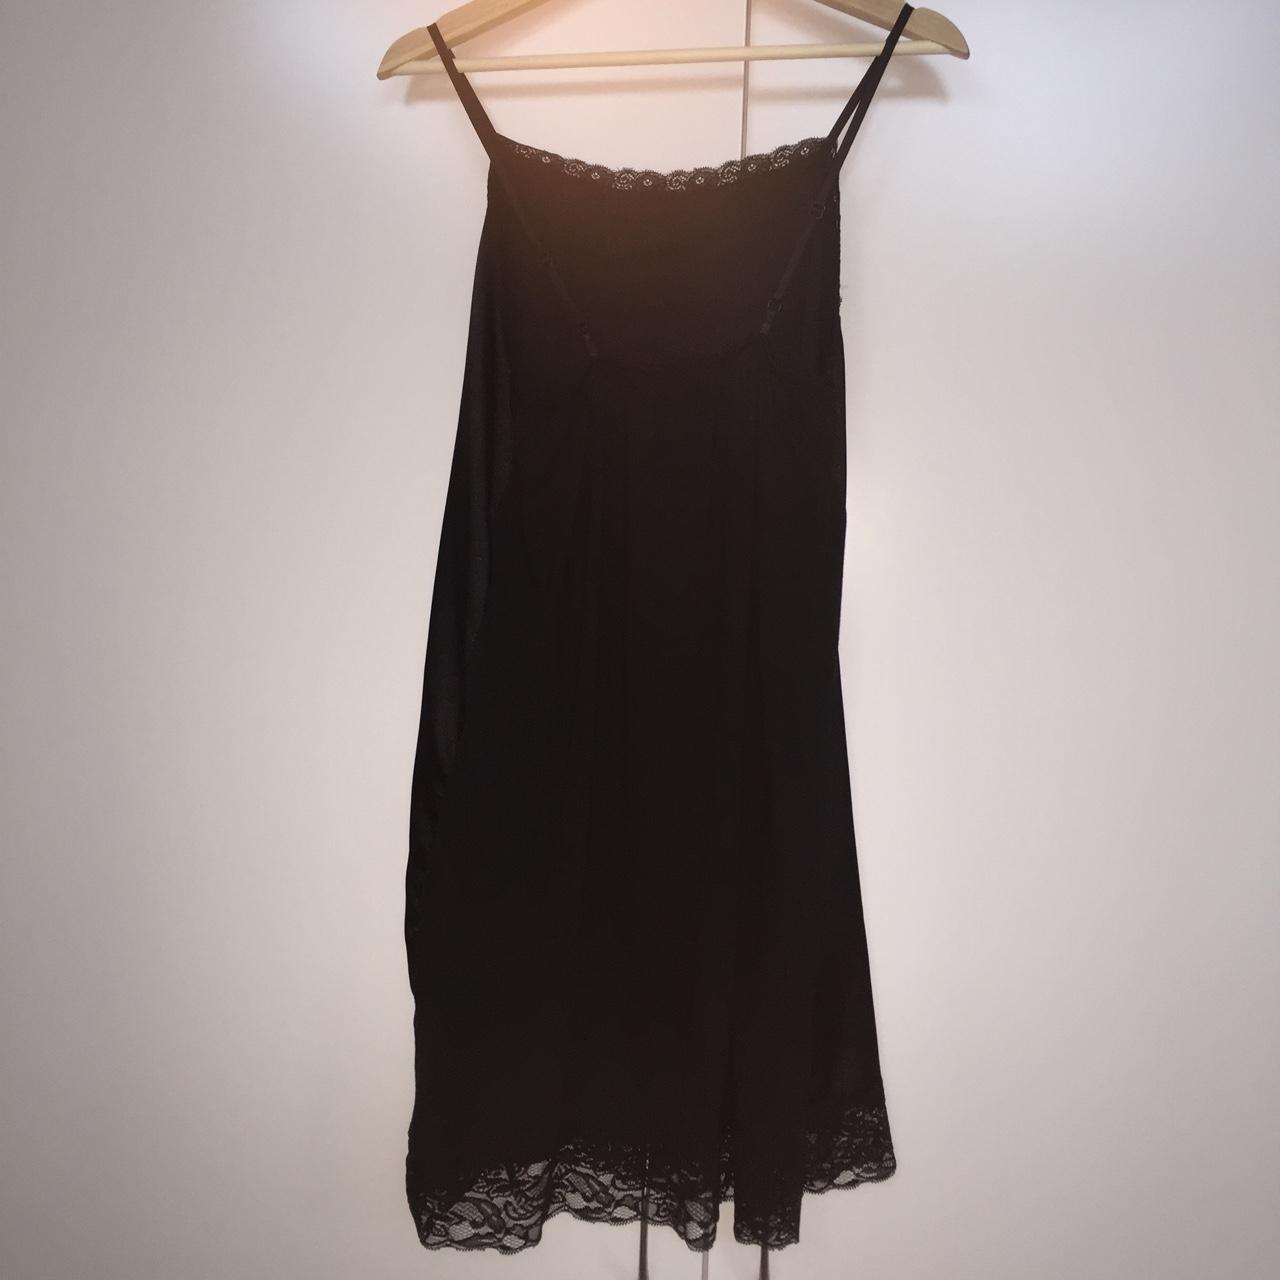 Black slip dress, really easy to style!! - Depop